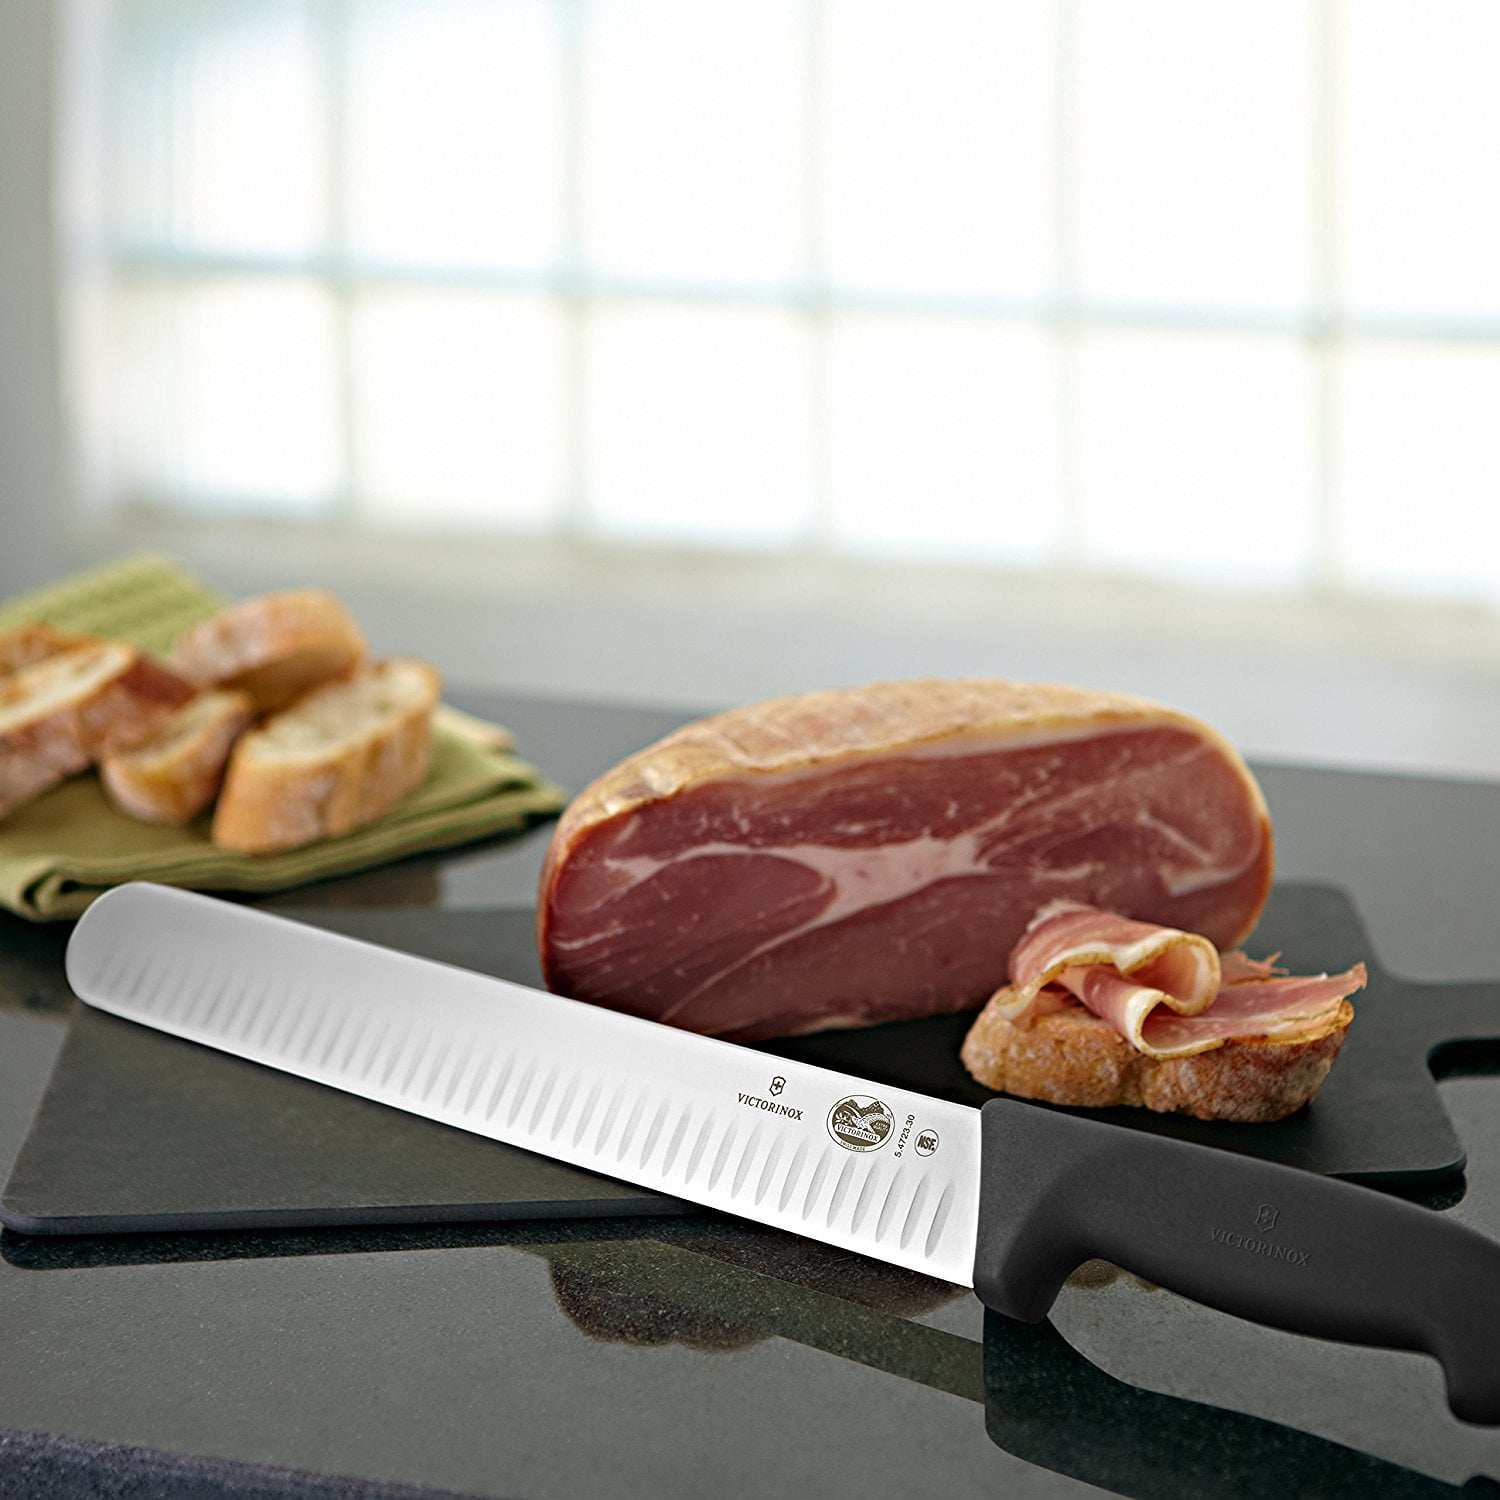 Victorinox Cutlery 12-Inch Chef's Knife/Slicer, Black Fibrox Handle (47522)